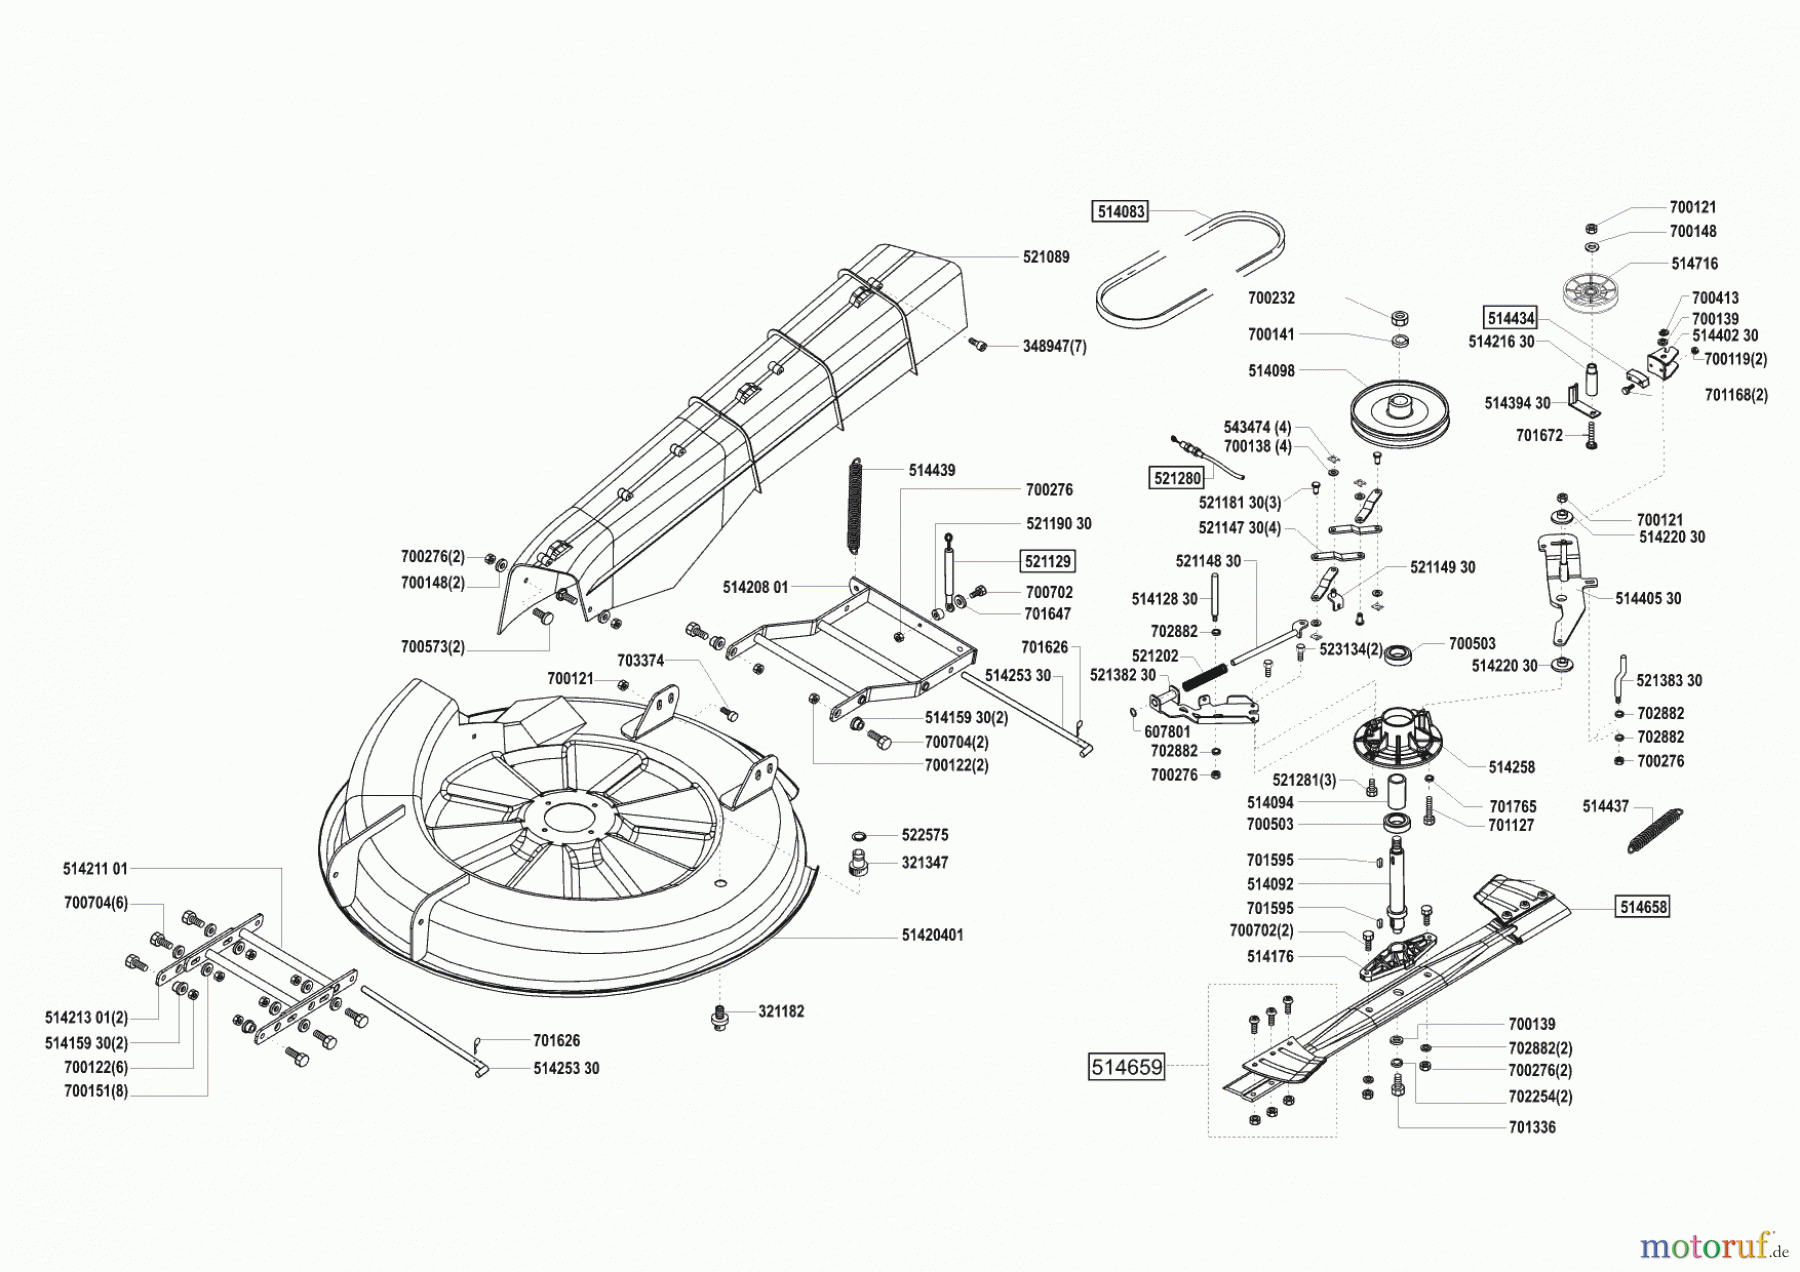  AL-KO Gartentechnik Rasentraktor T 900 vor 01/2002 Seite 5